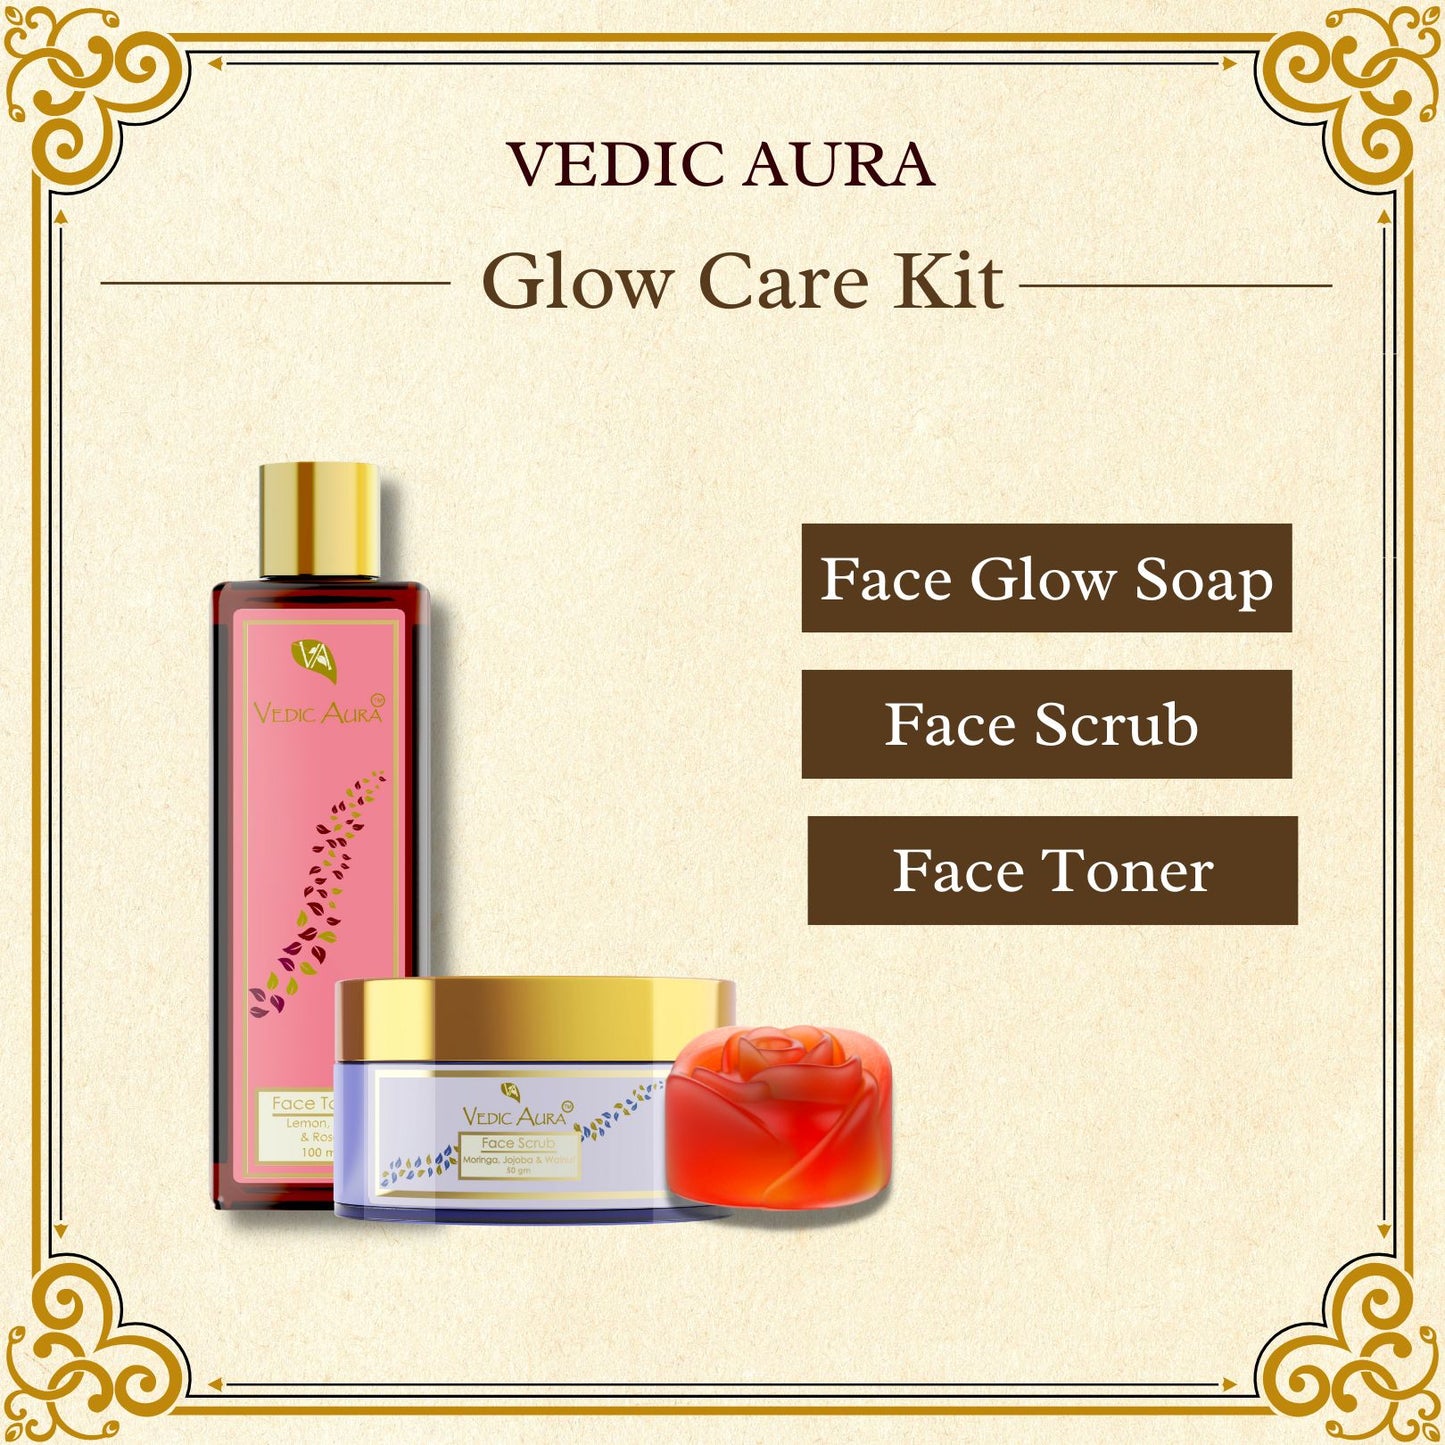 Vedic Aura Glow Care Kit